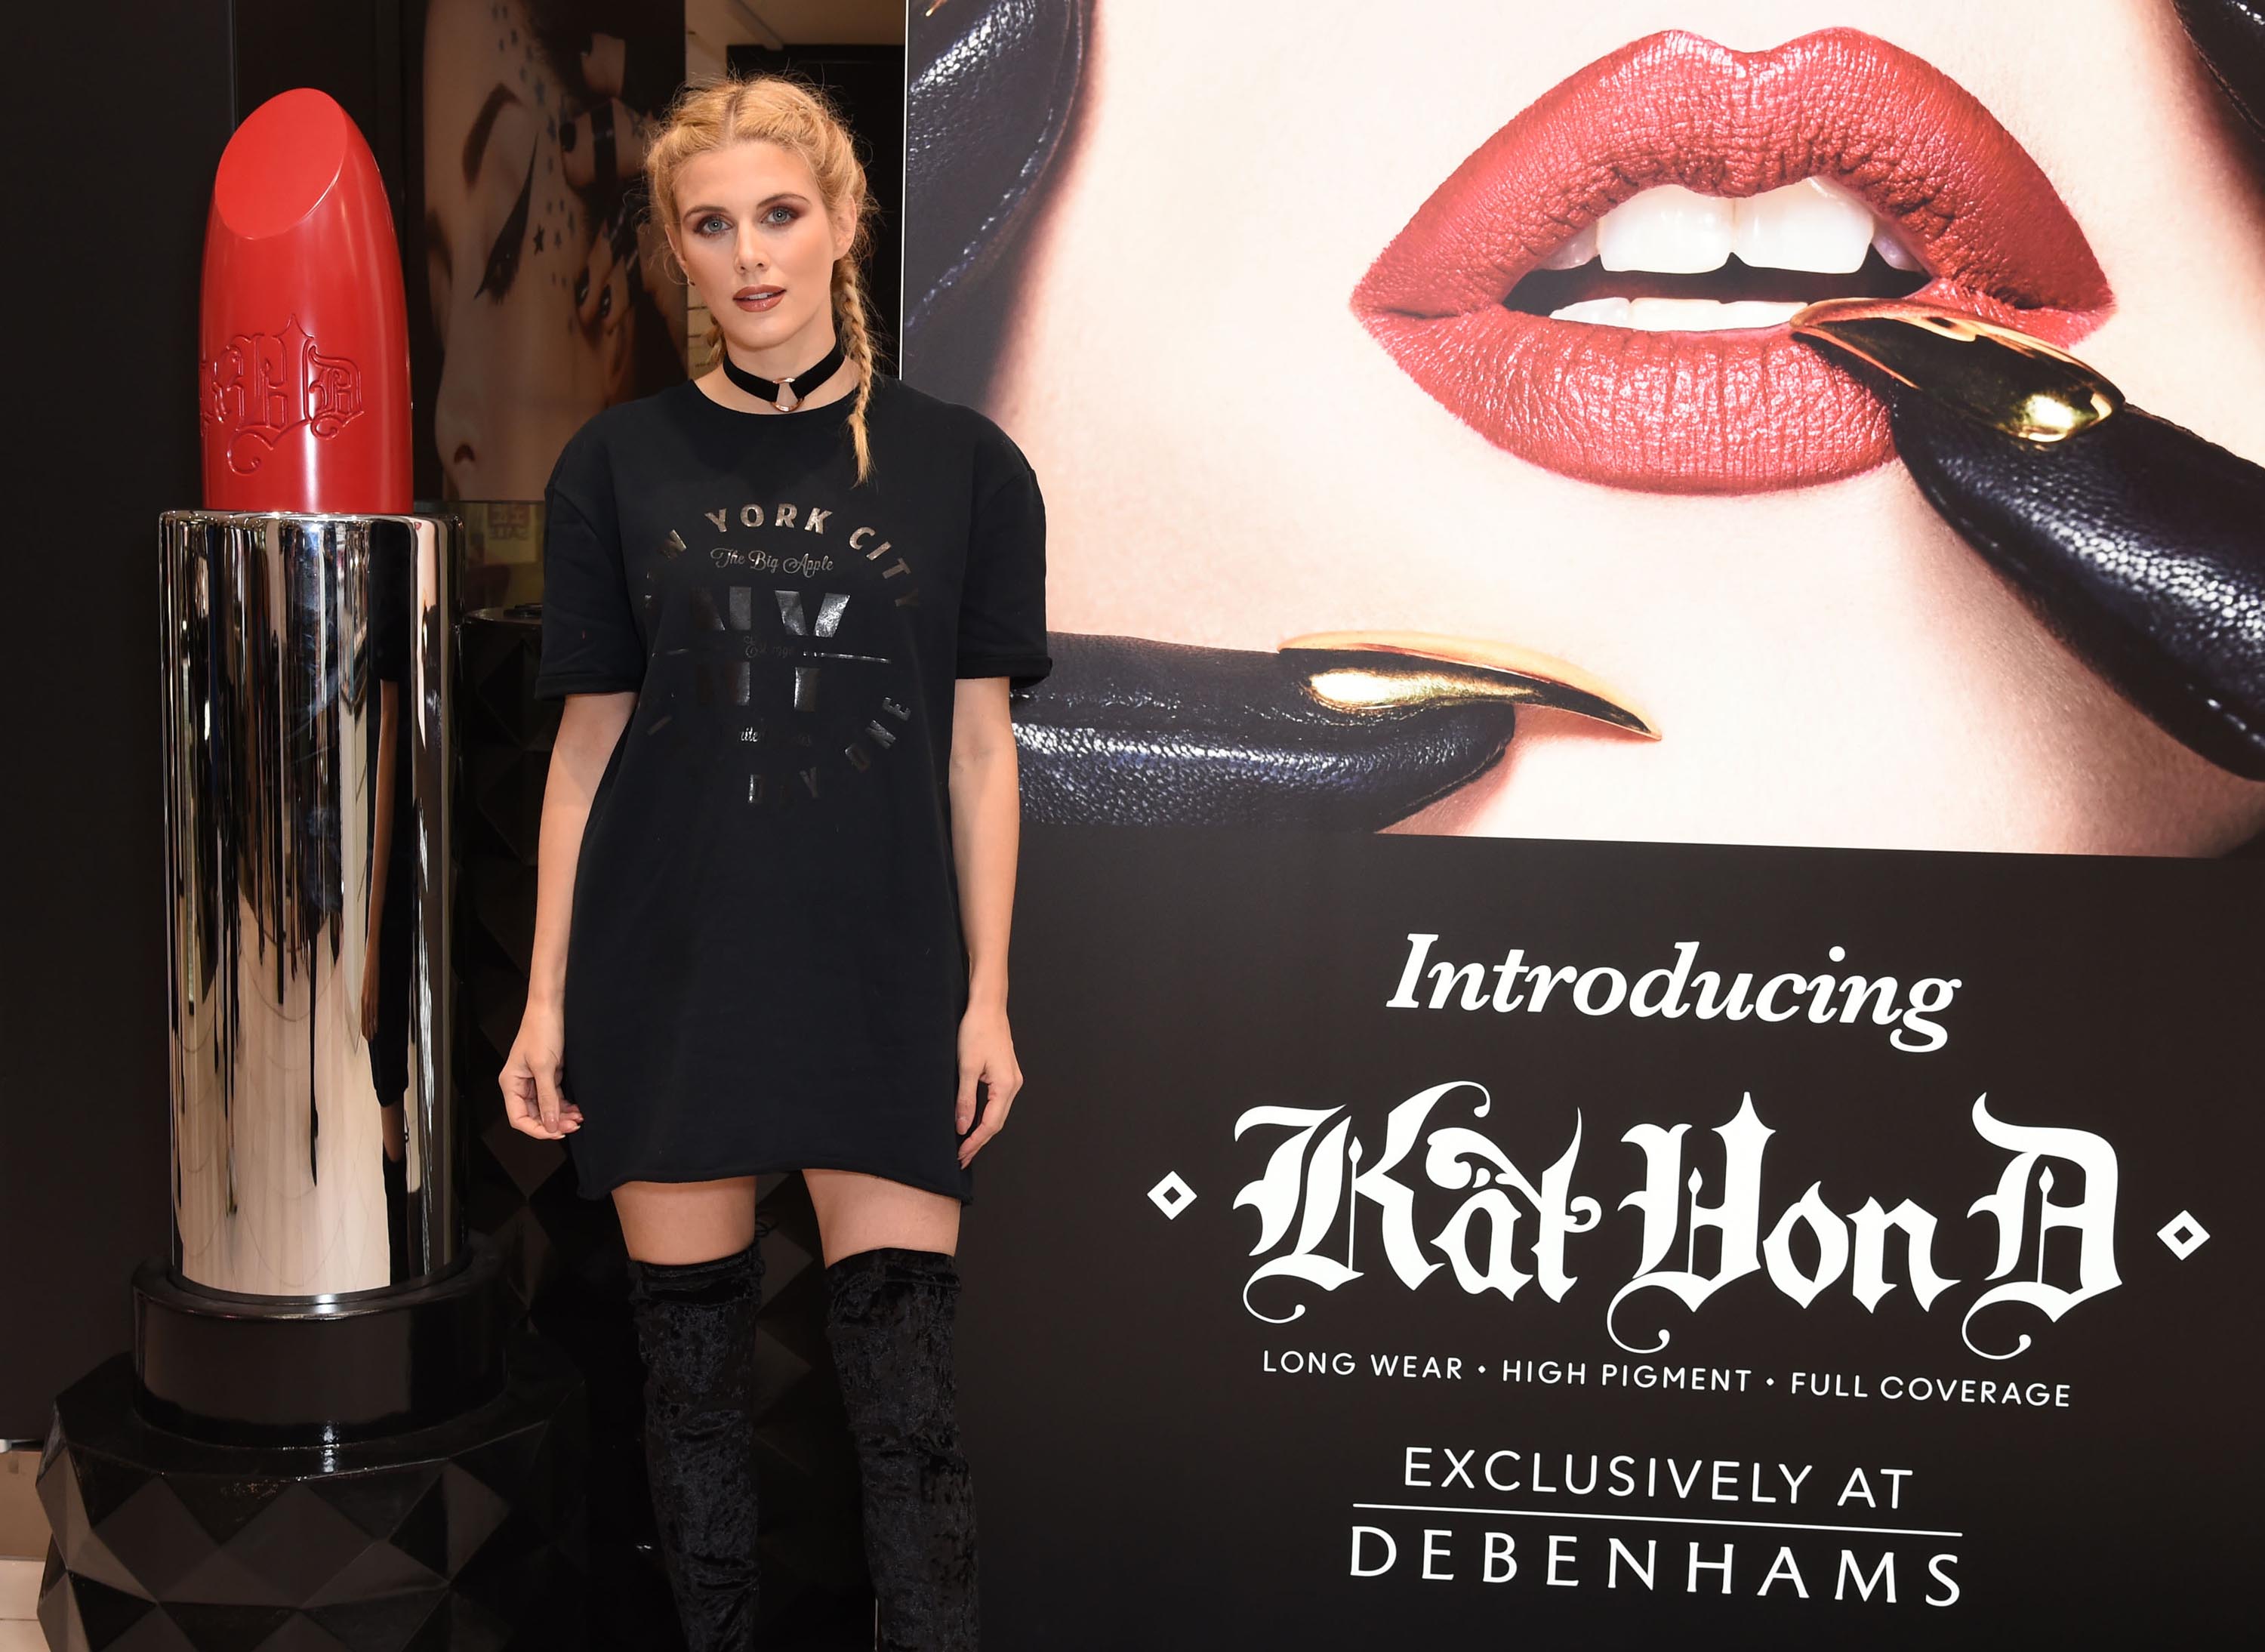 Ashley James attends the launch of Kat Von D Beauty